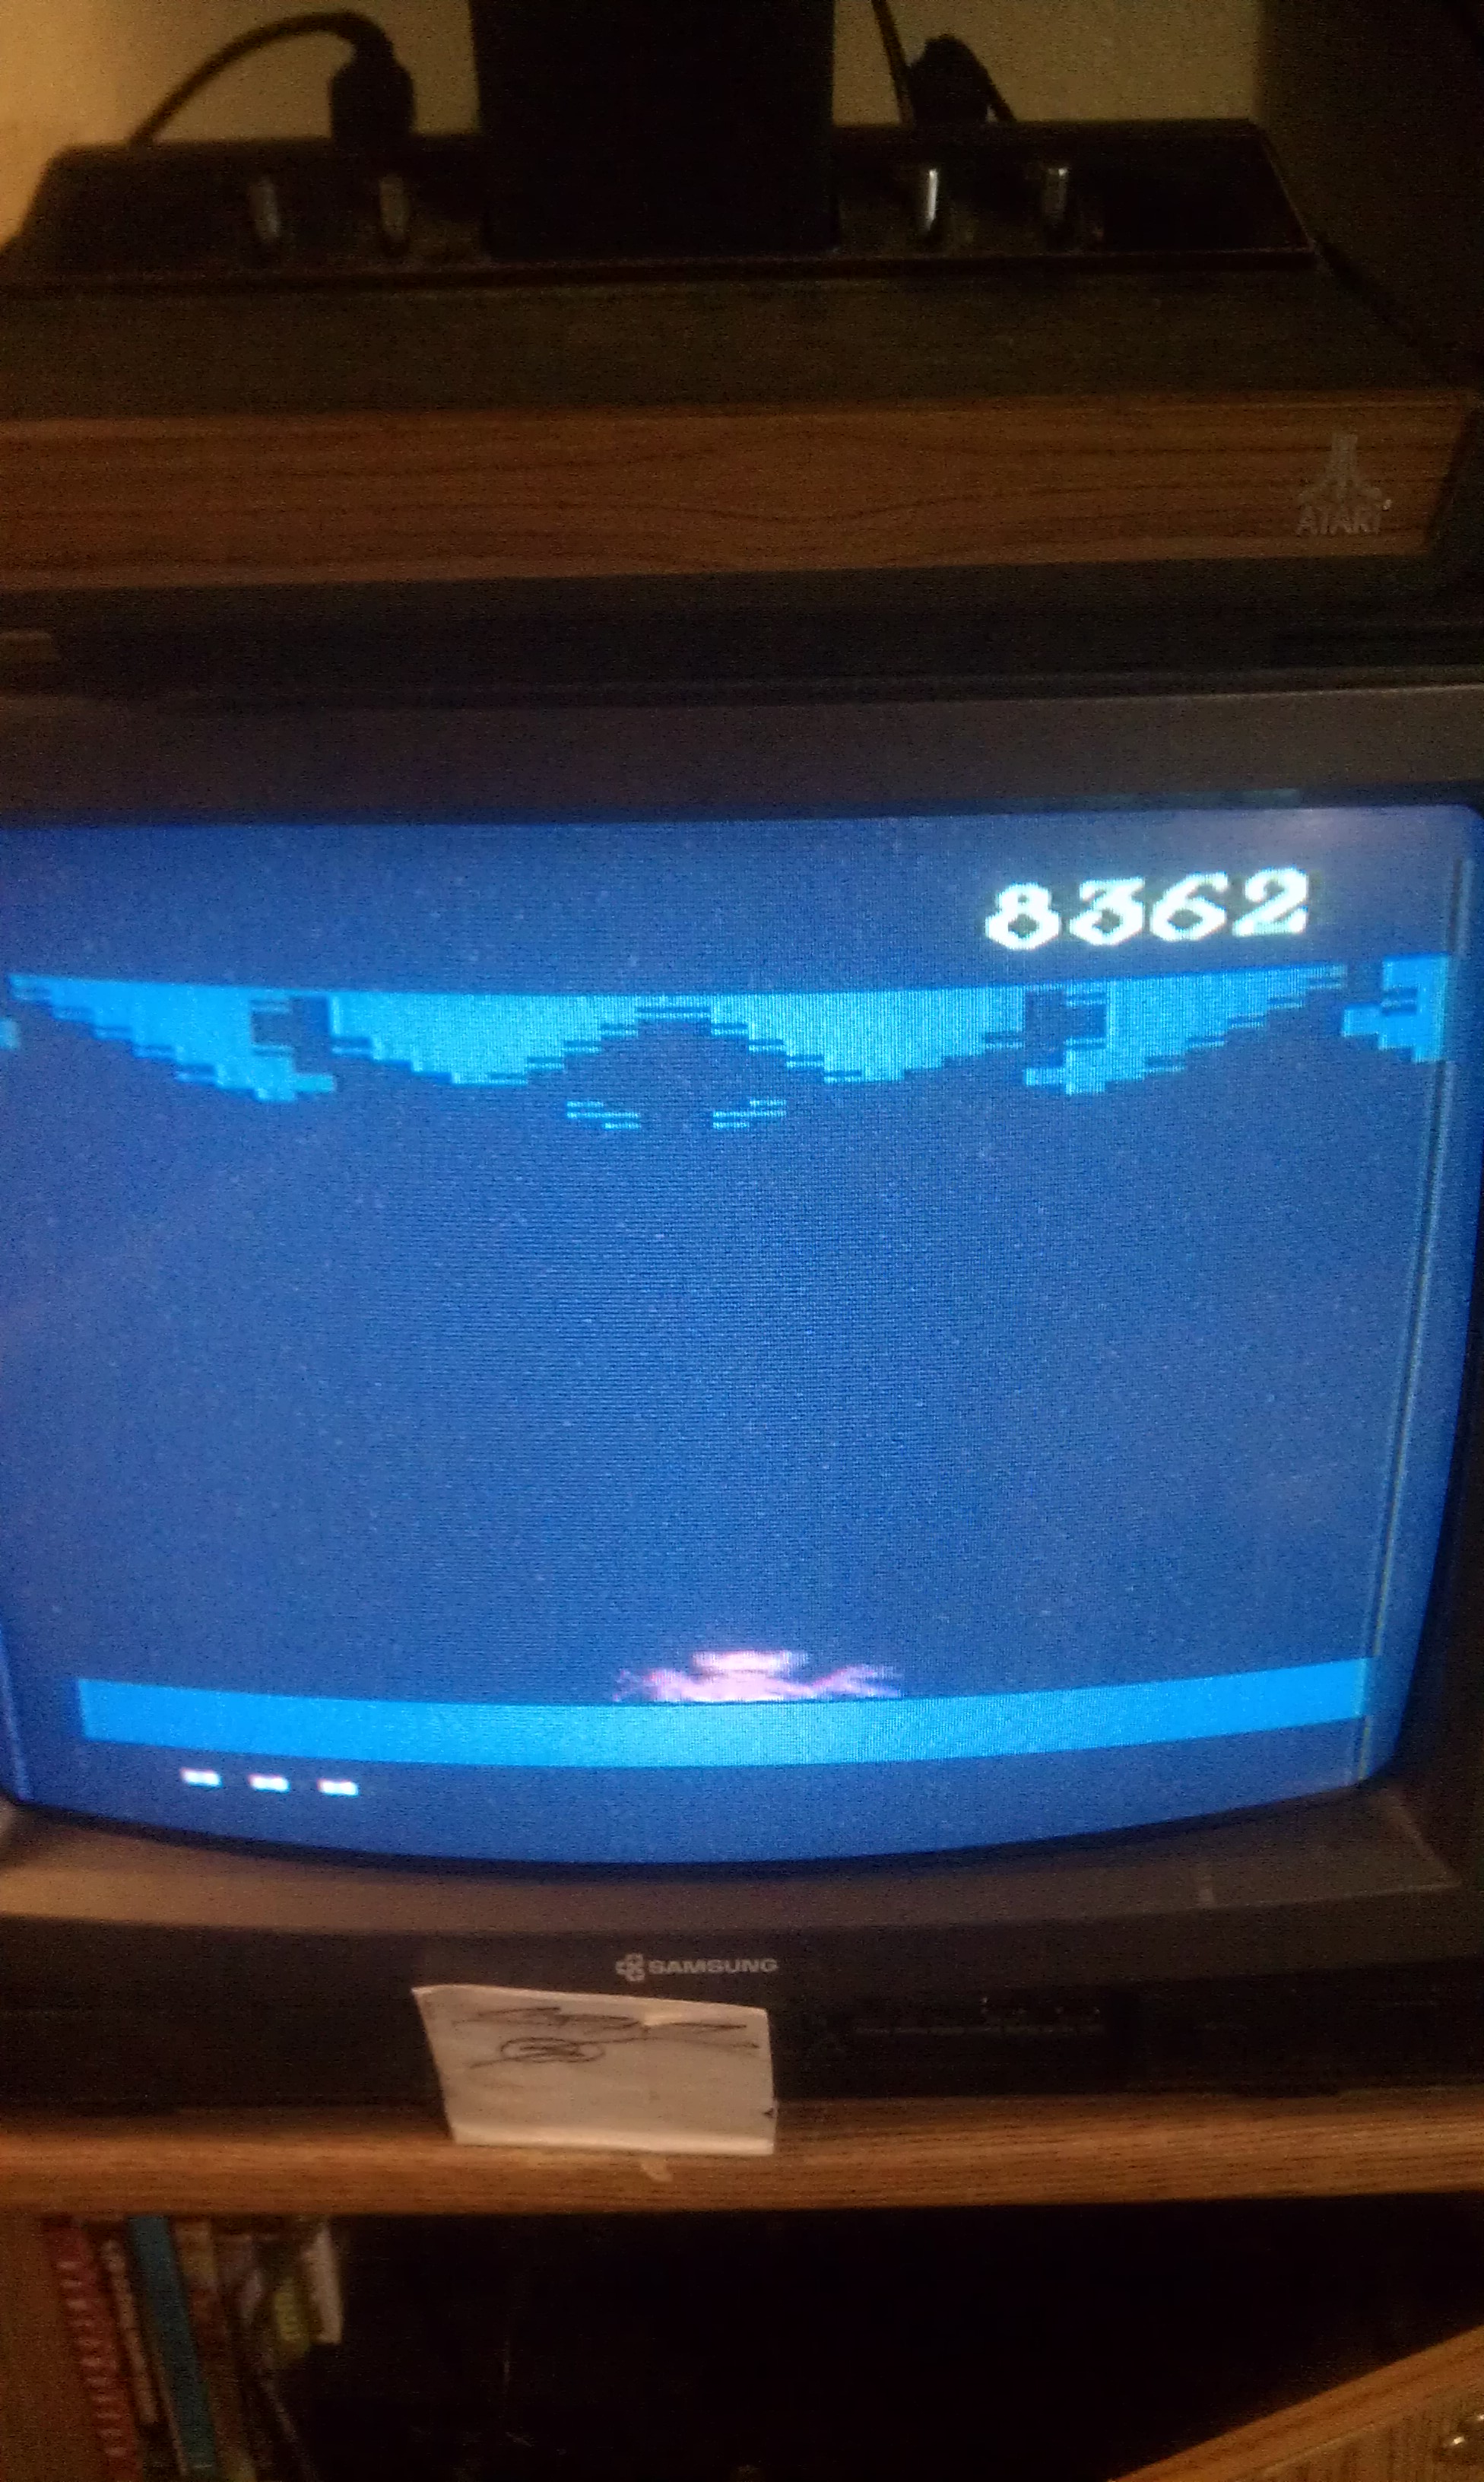 S.BAZ: Subterranea (Atari 2600 Novice/B) 8,362 points on 2019-11-21 14:58:16